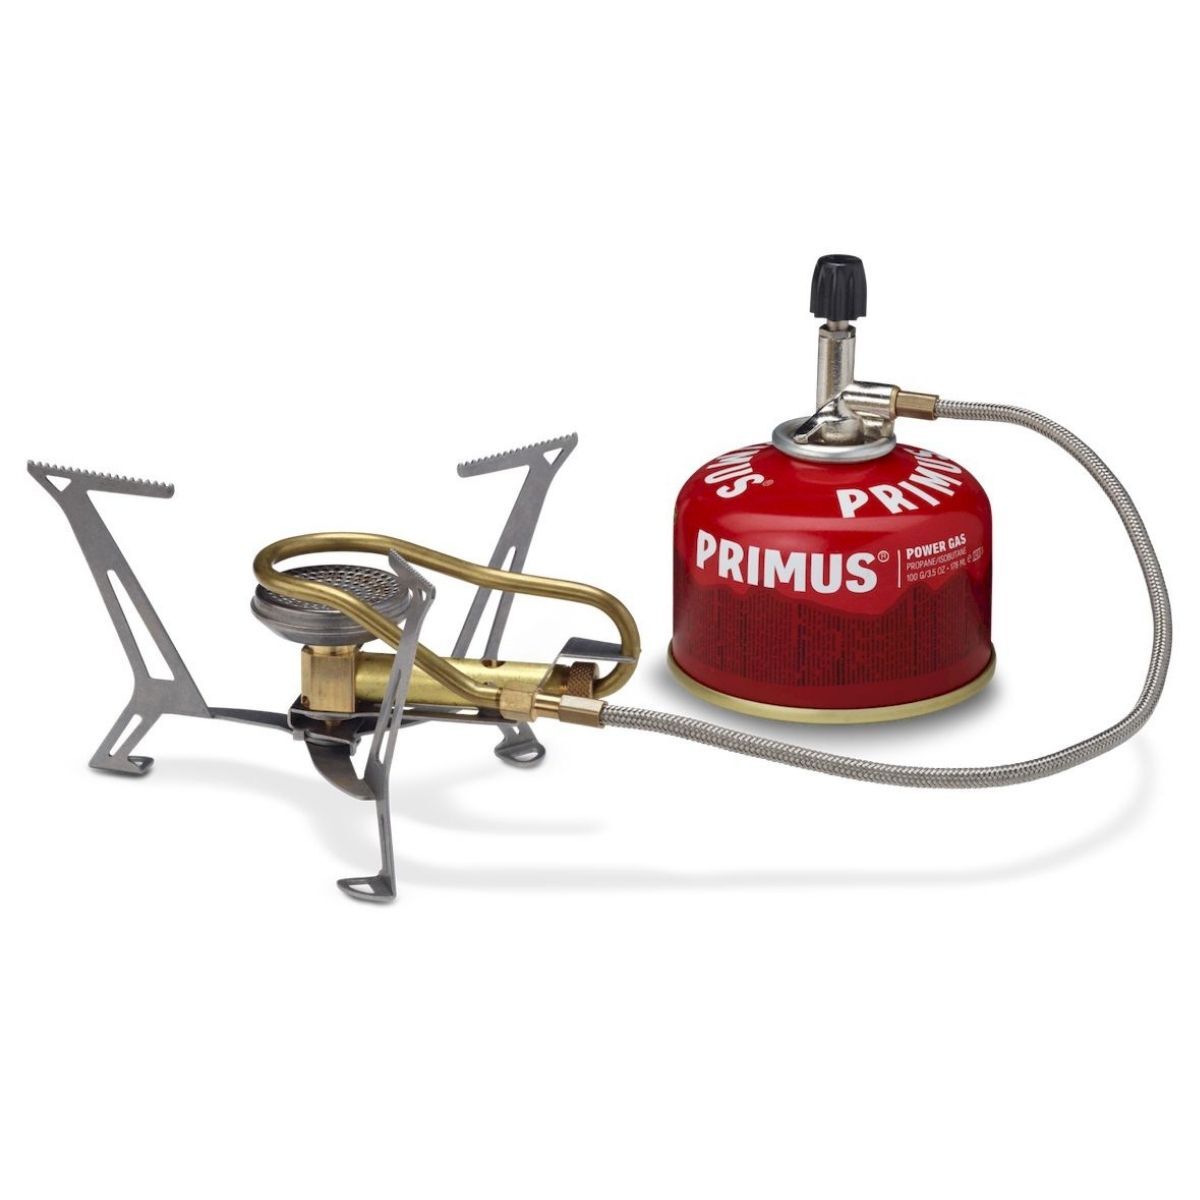 Primus Express Spider II - Gas stove